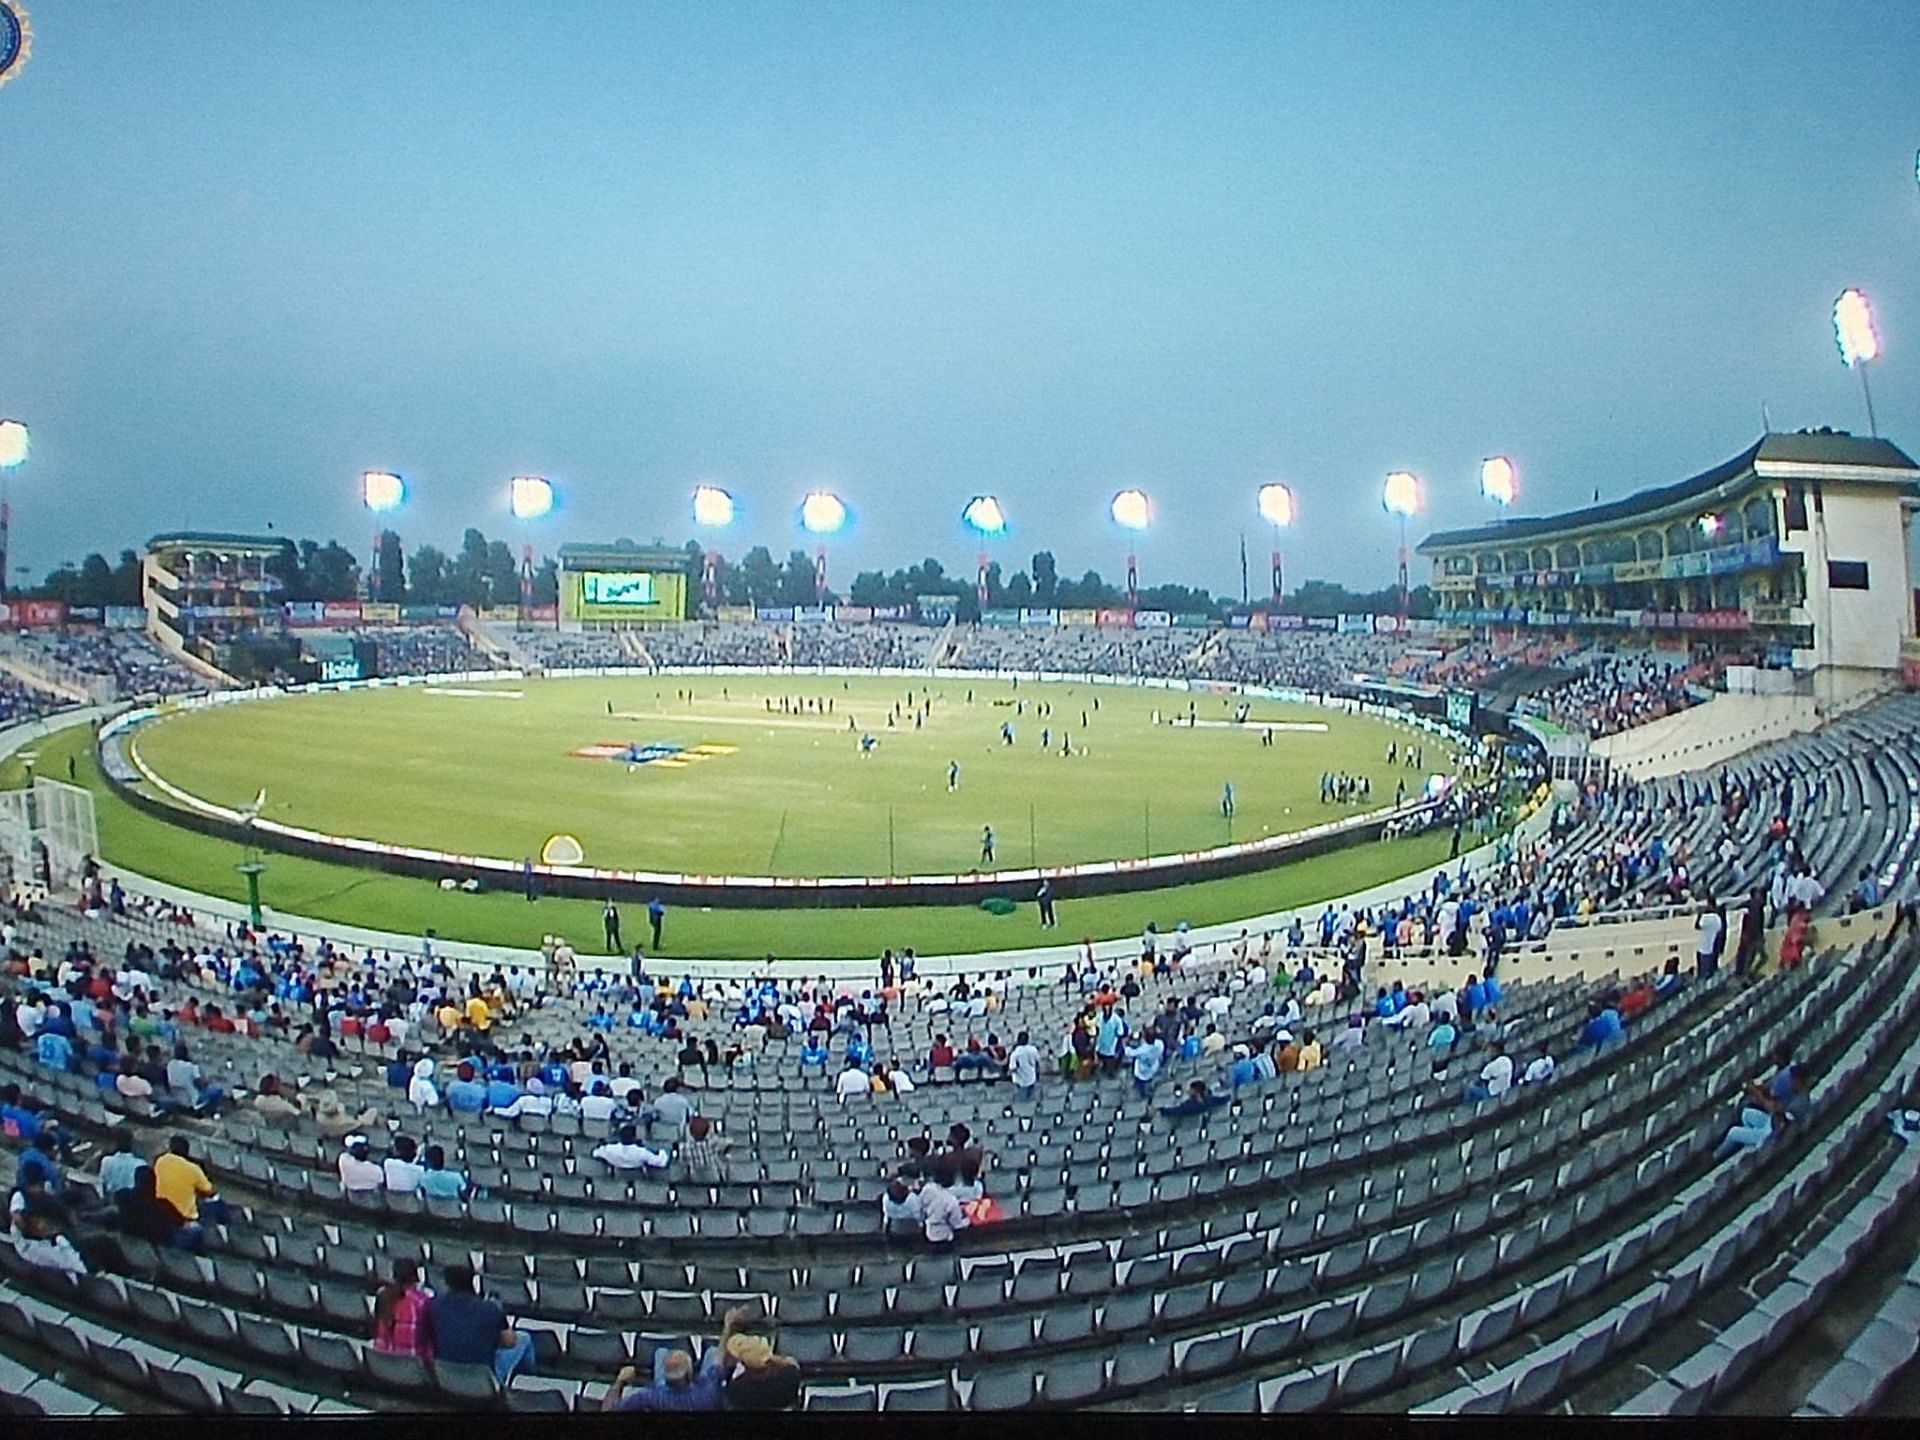 Mohali cricket stadium. (Image Credits: Twitter)